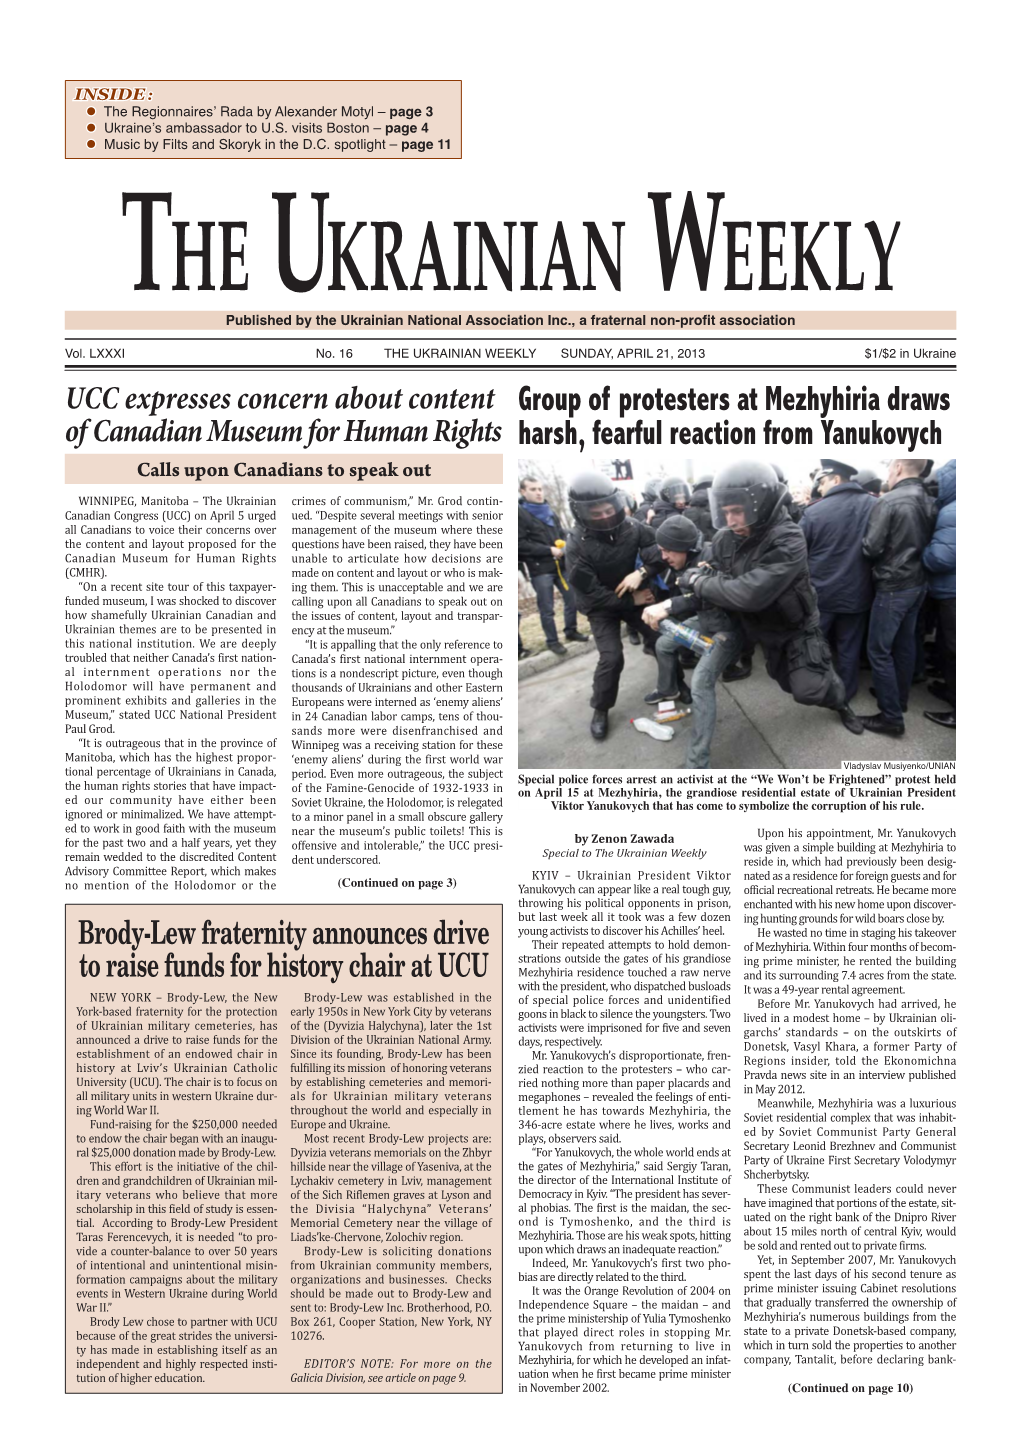 The Ukrainian Weekly 2013, No.16